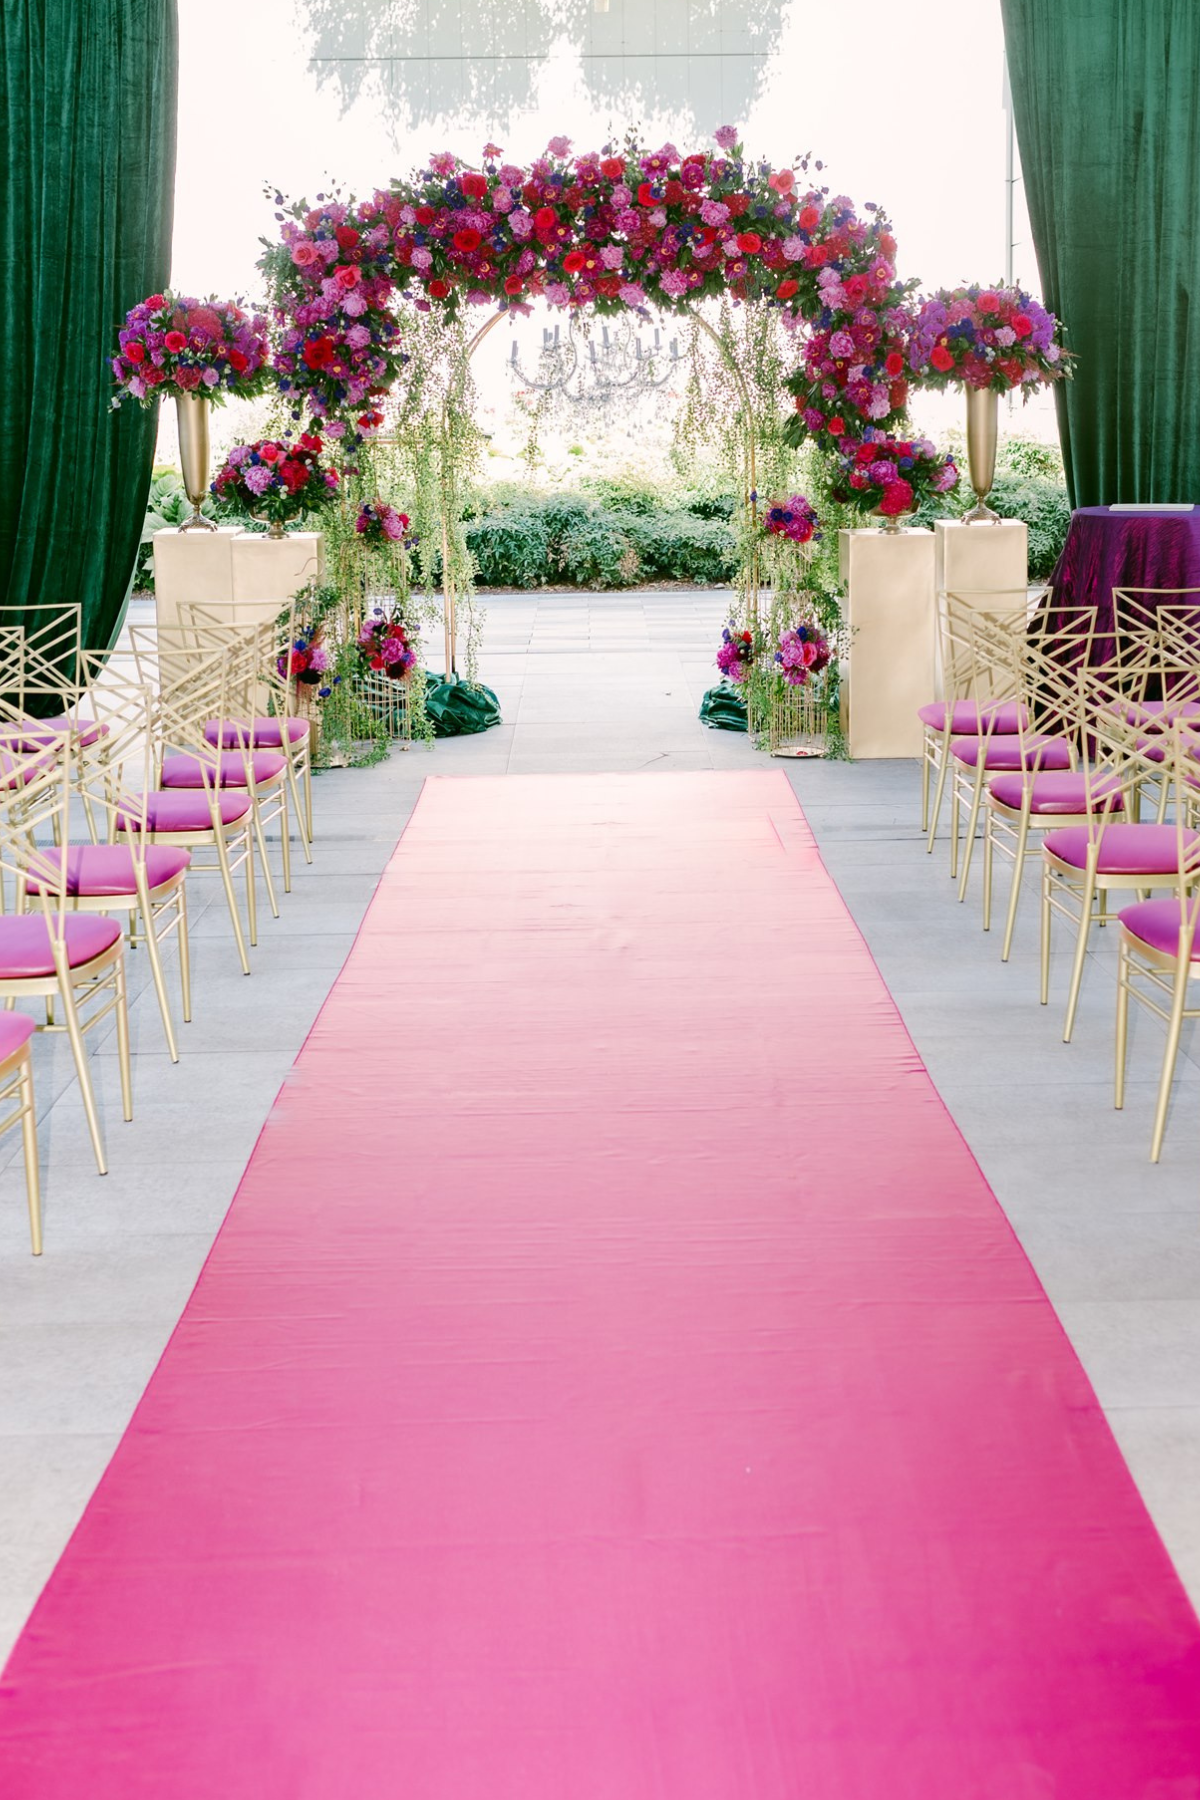 secret-garden-wedding-red-purple-flowers-greenery-arch-pink-aisle